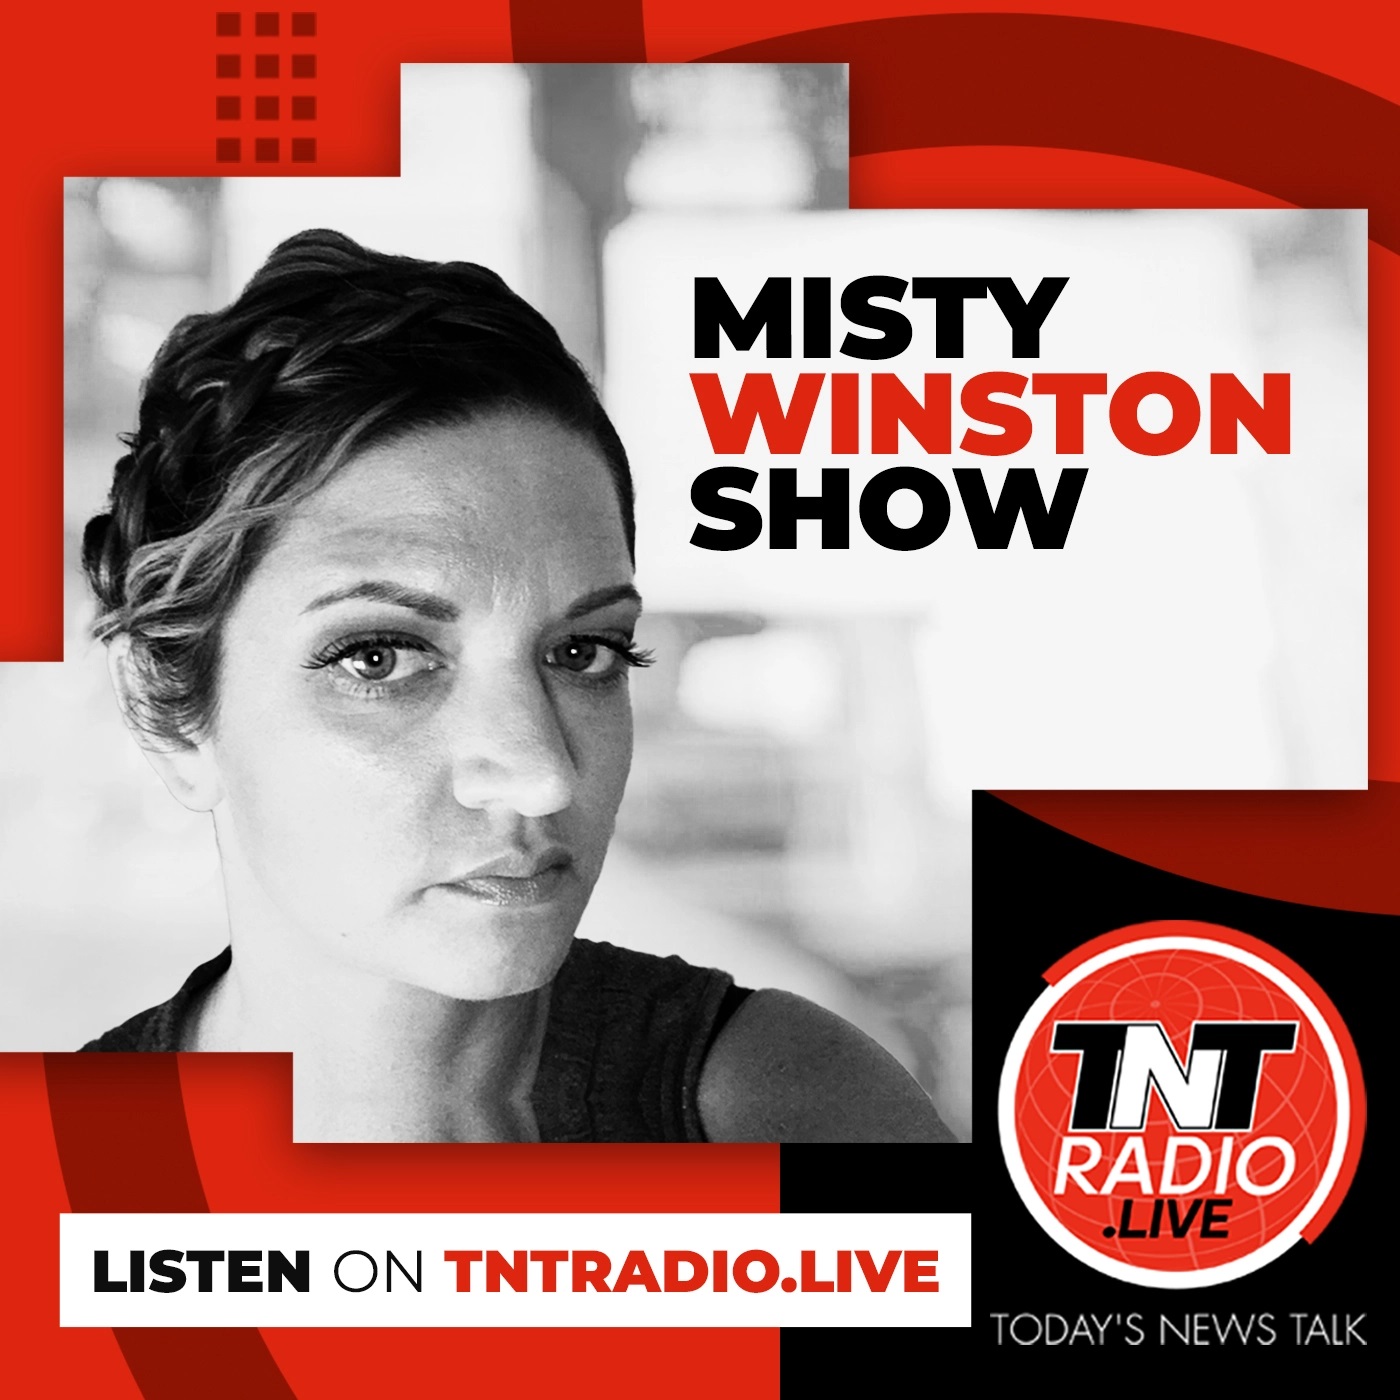 LISTEN: Kit Knightly on the Misty Winston Show